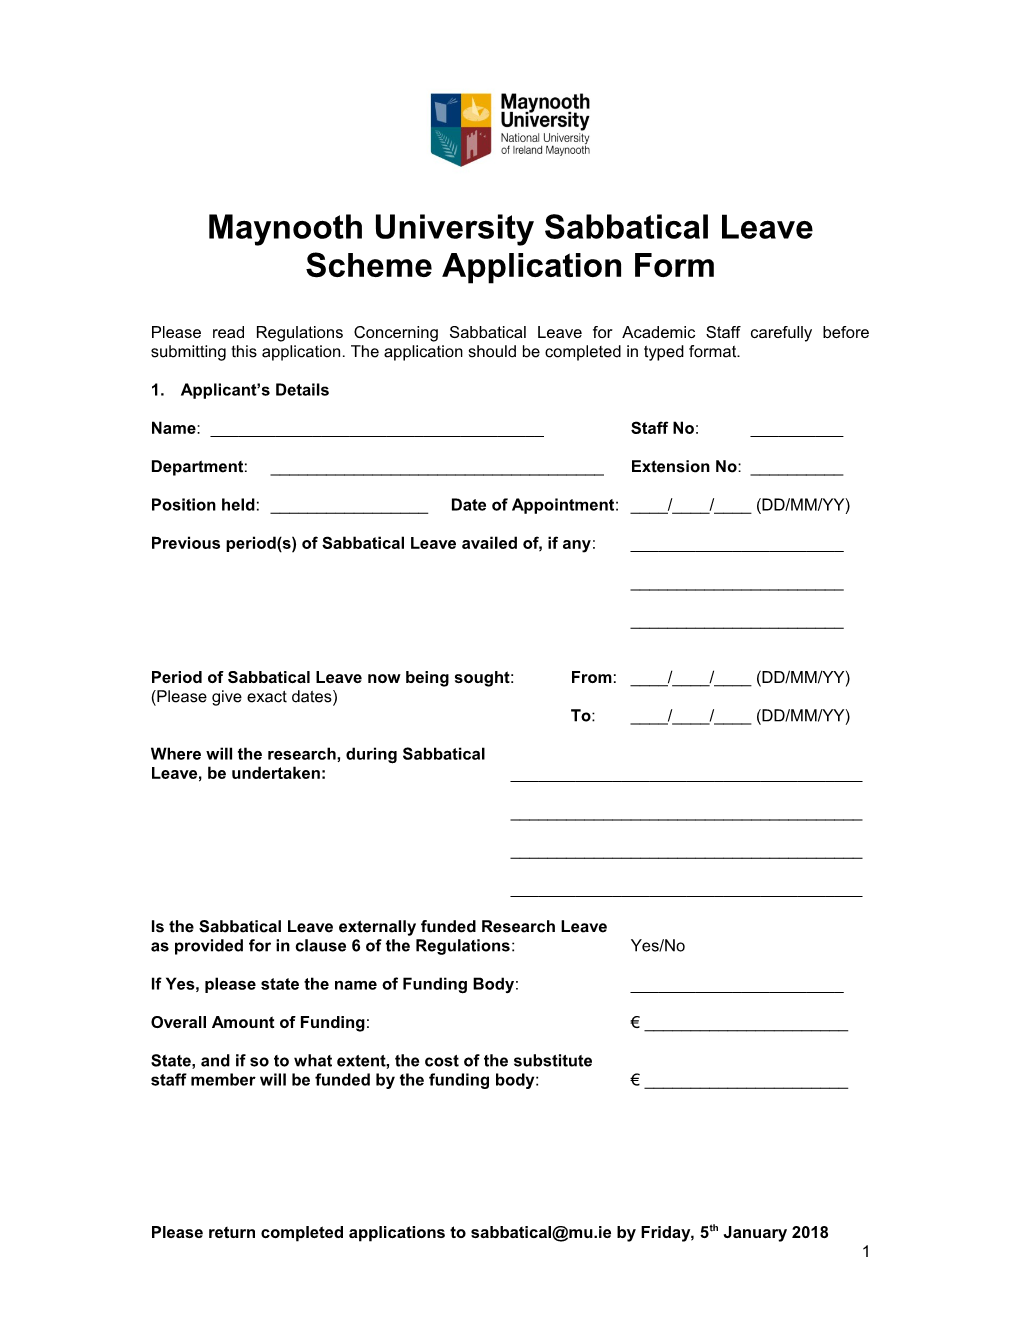 Maynooth University Sabbatical Leave Scheme Application Form